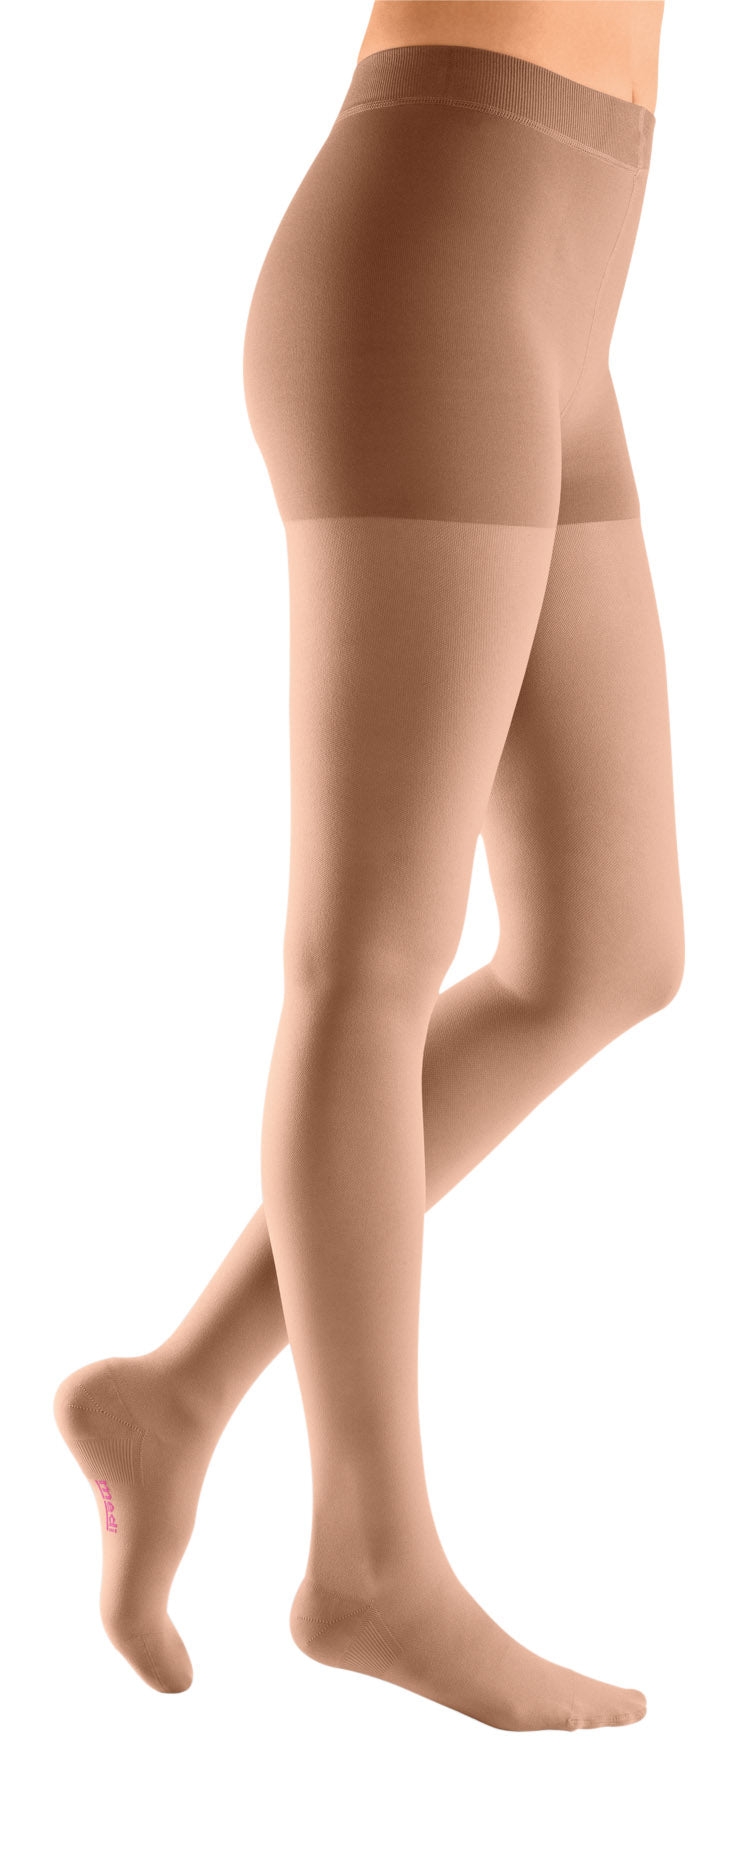 mediven plus 20-30 mmHg Panty Closed Toe Compression Stockings, Beige, I-Standard